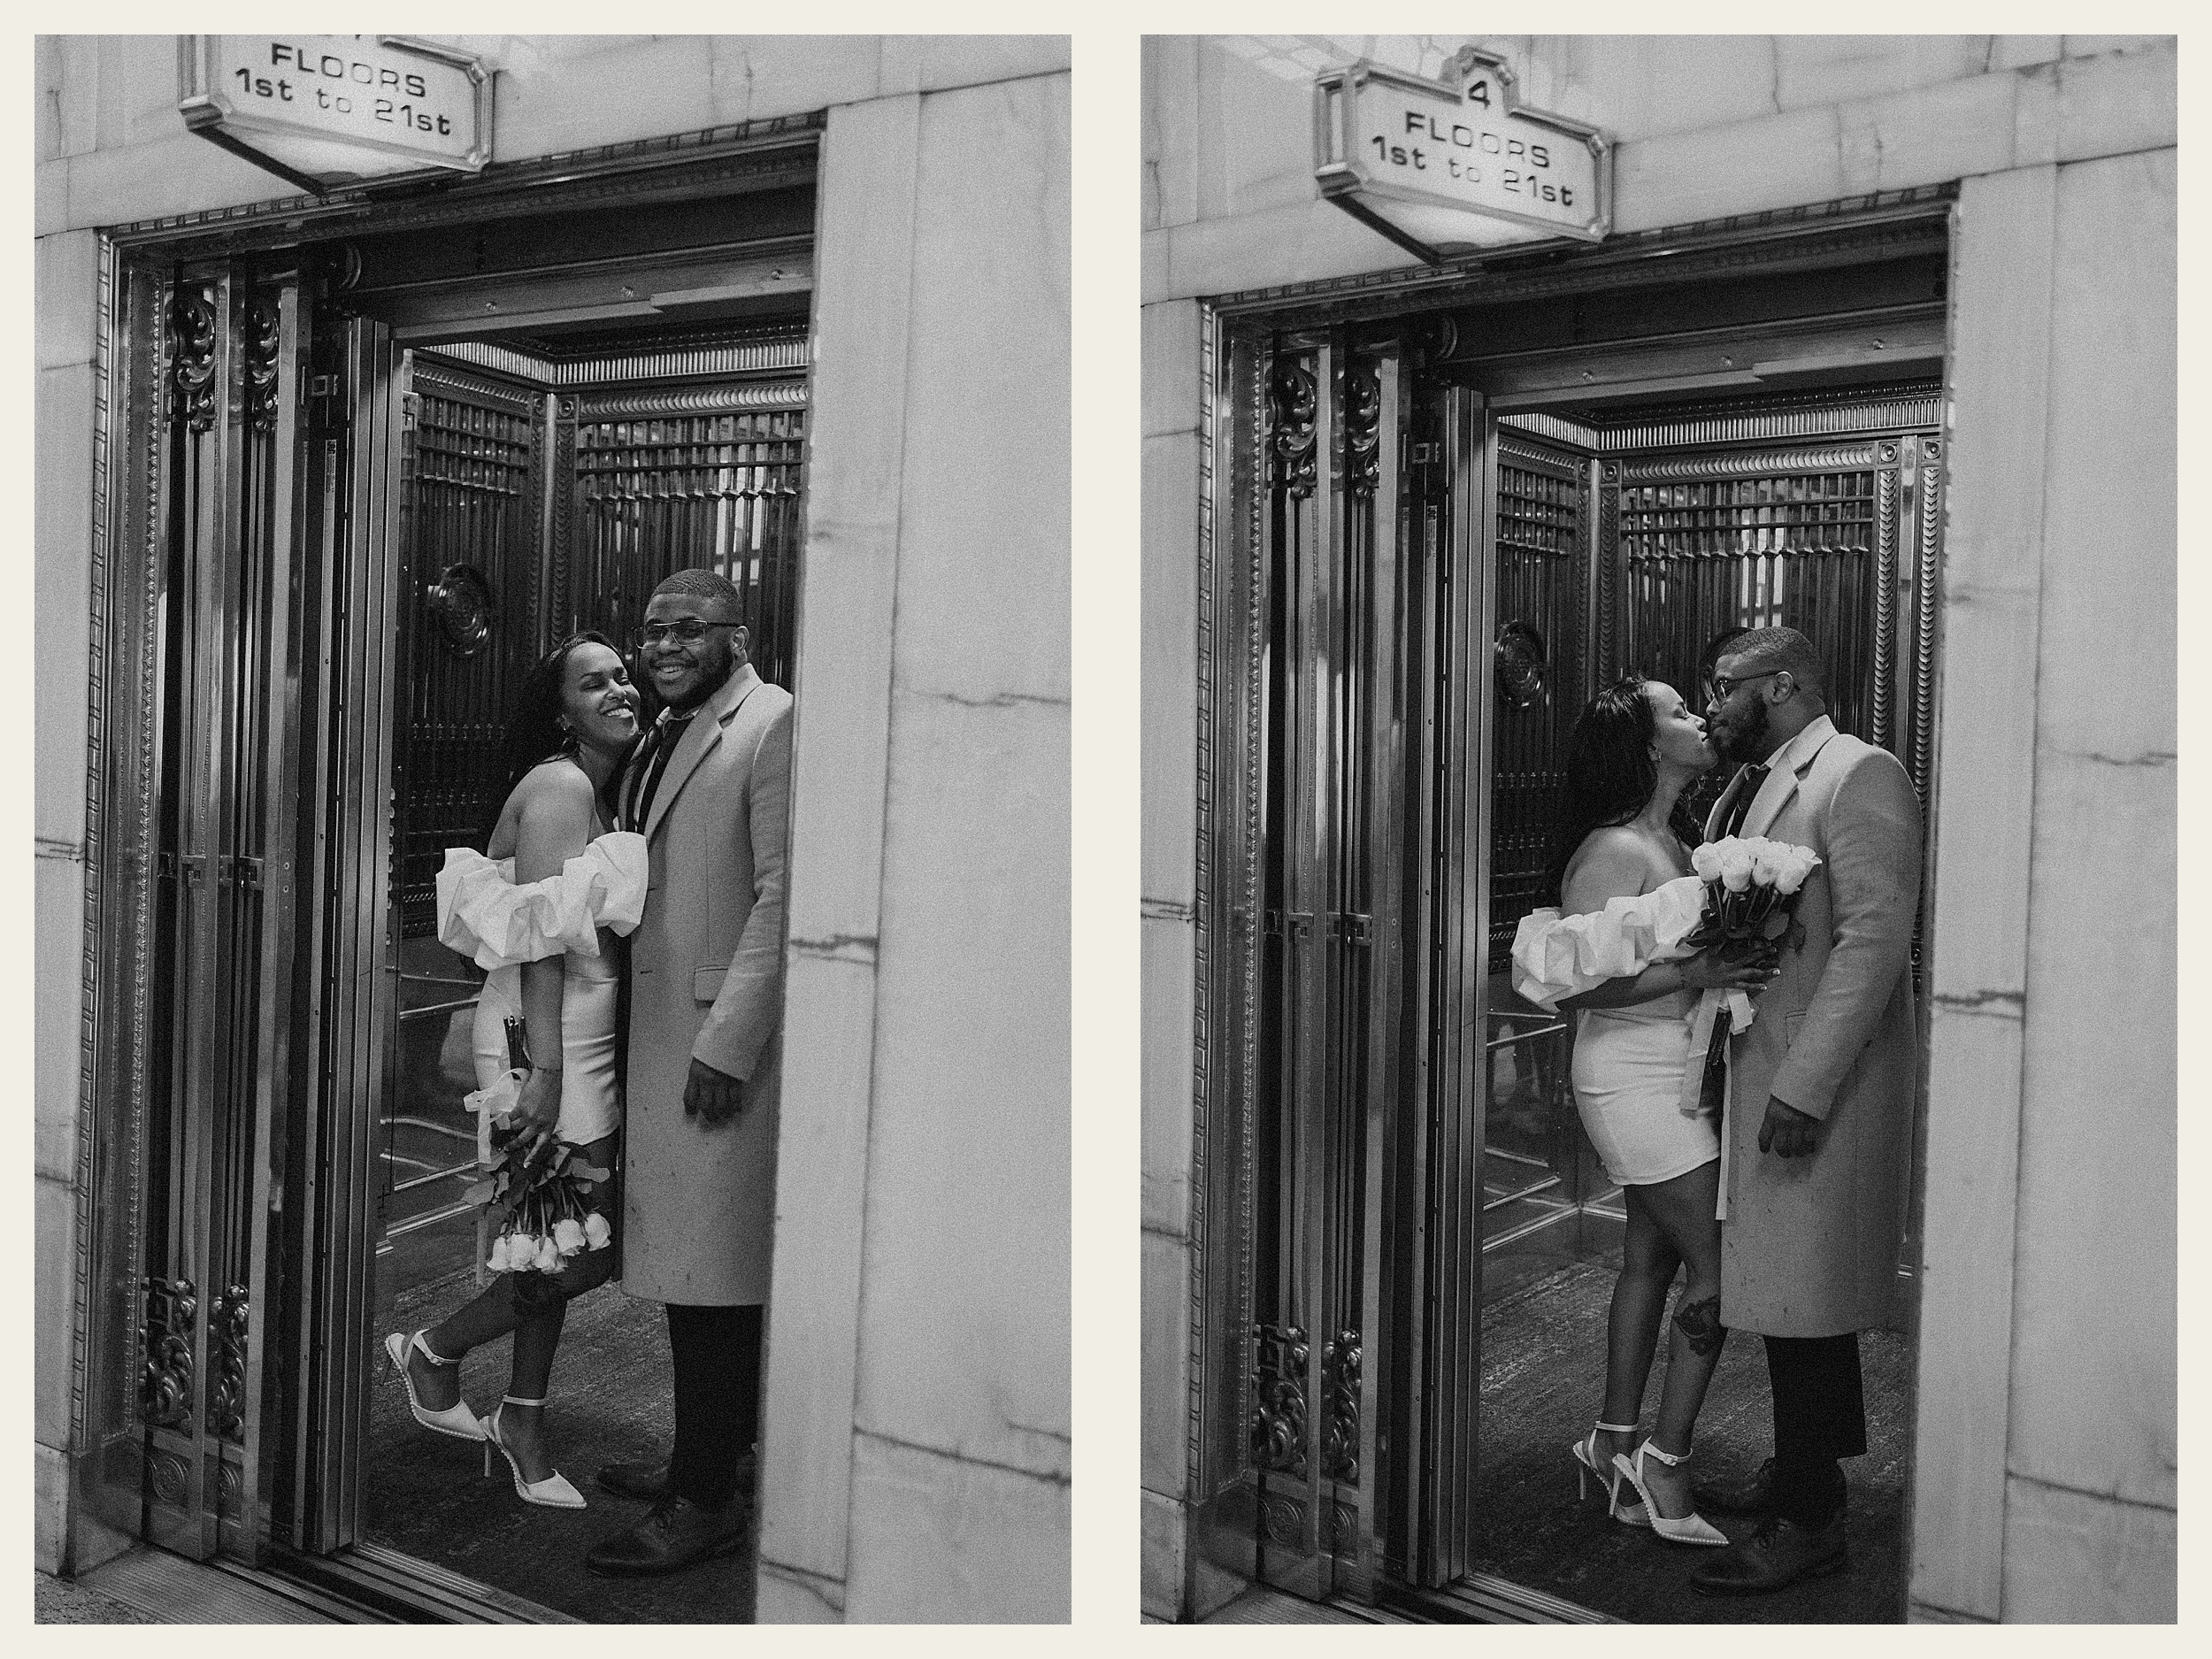 bride and groom kissing in elevator